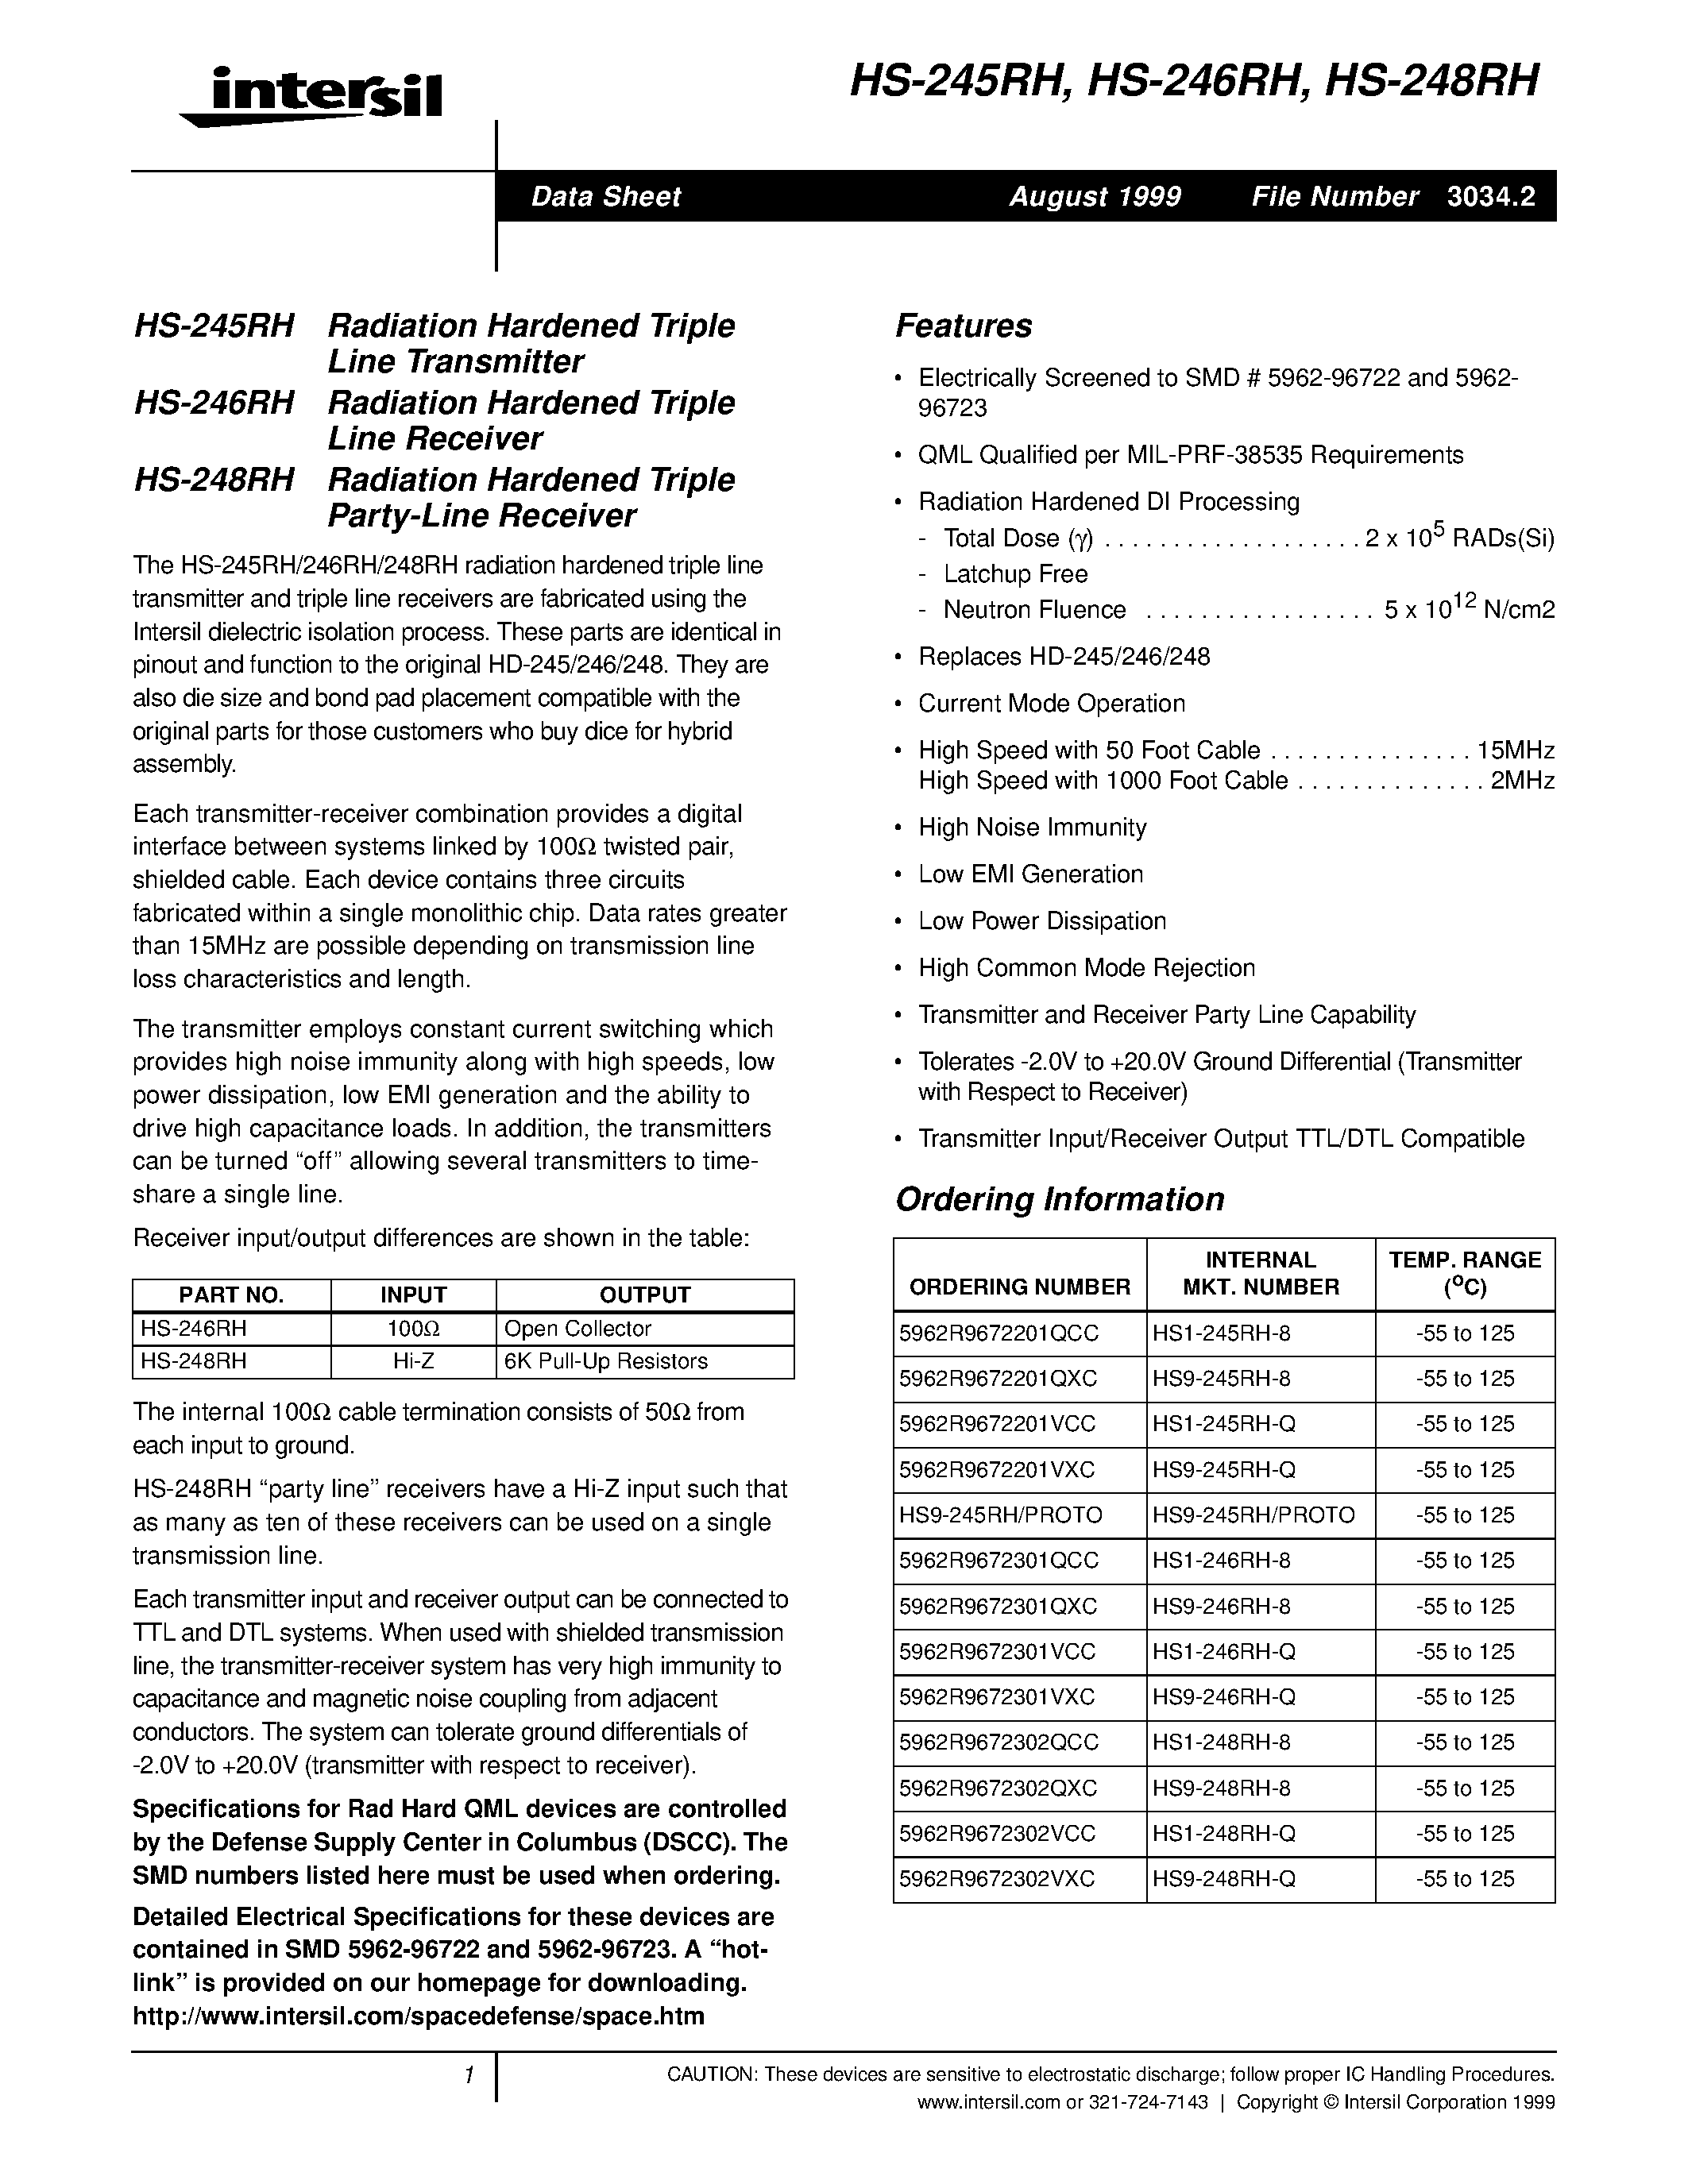 Даташит HS9-246RH-Q - Radiation Hardened Triple Line(party-Line) Transmitter страница 1